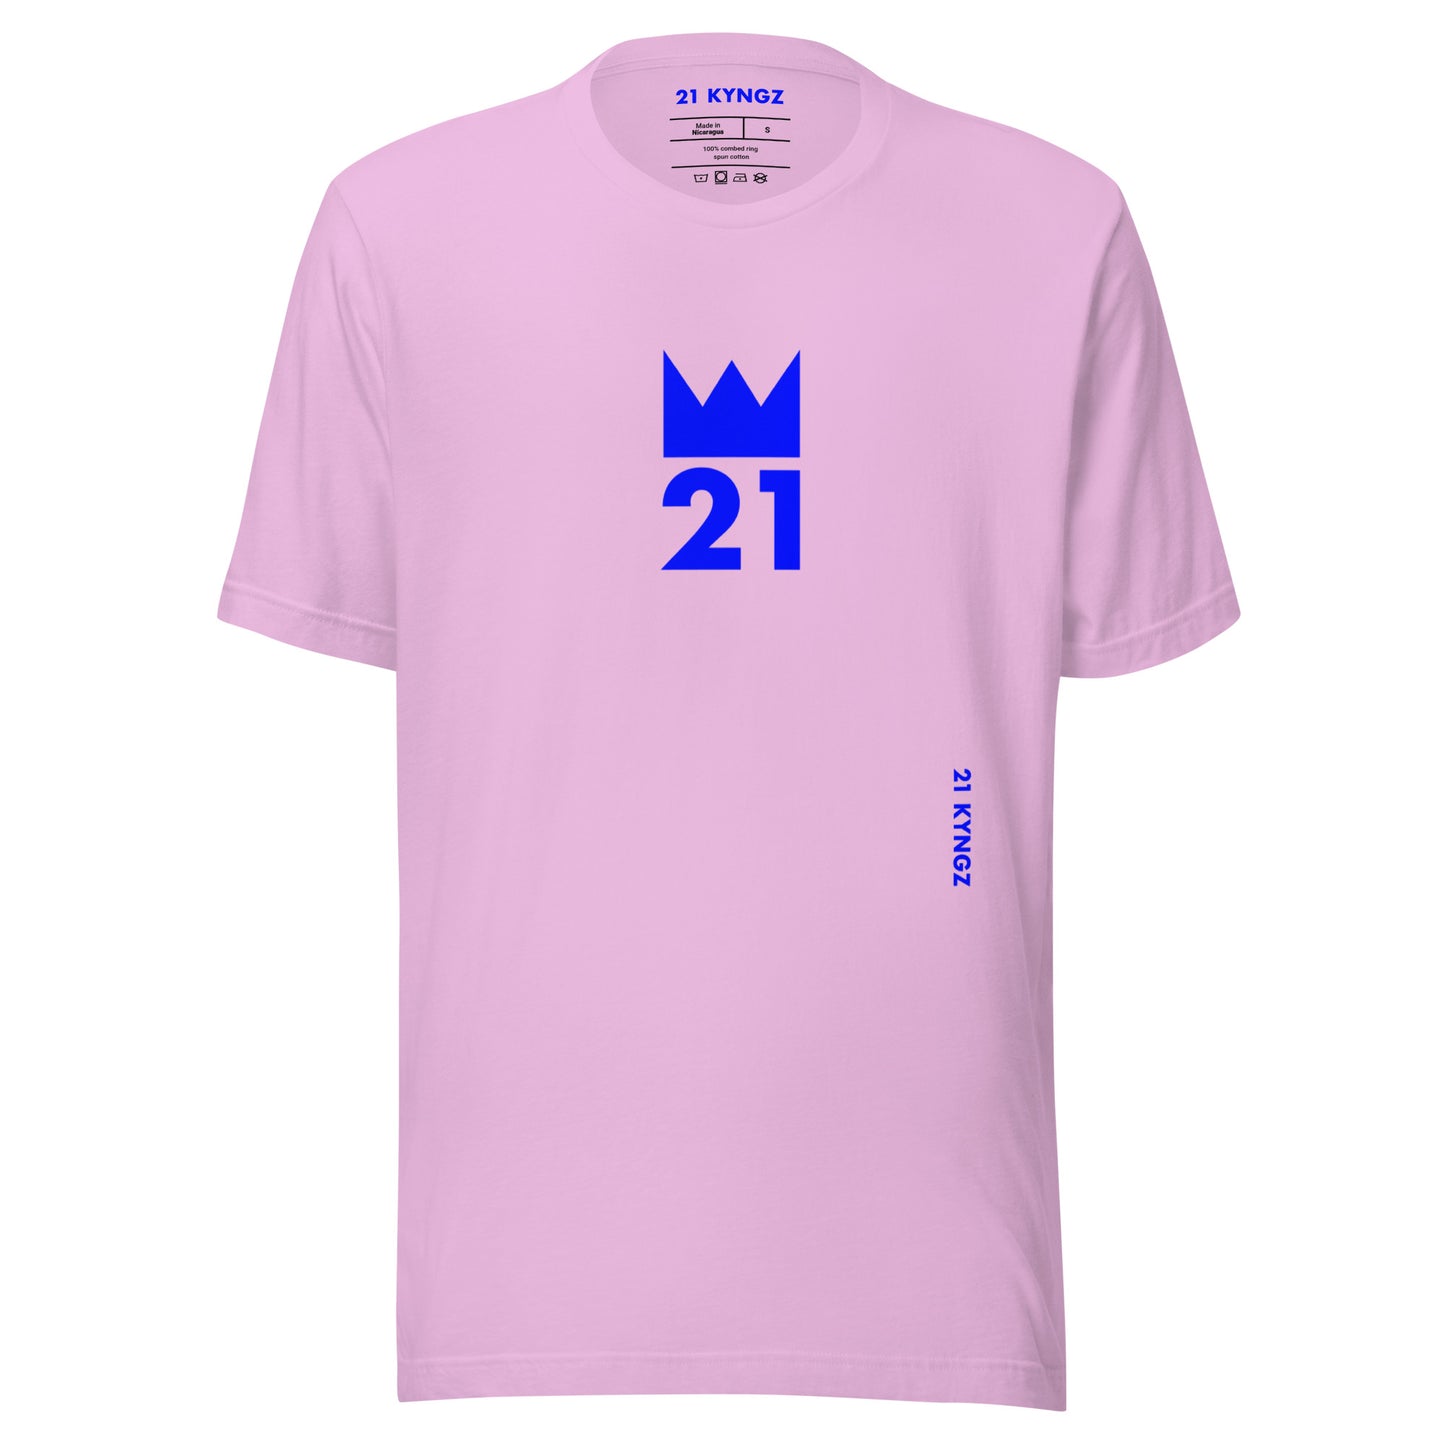 21 KYNGZ (Bl)2 t-shirt